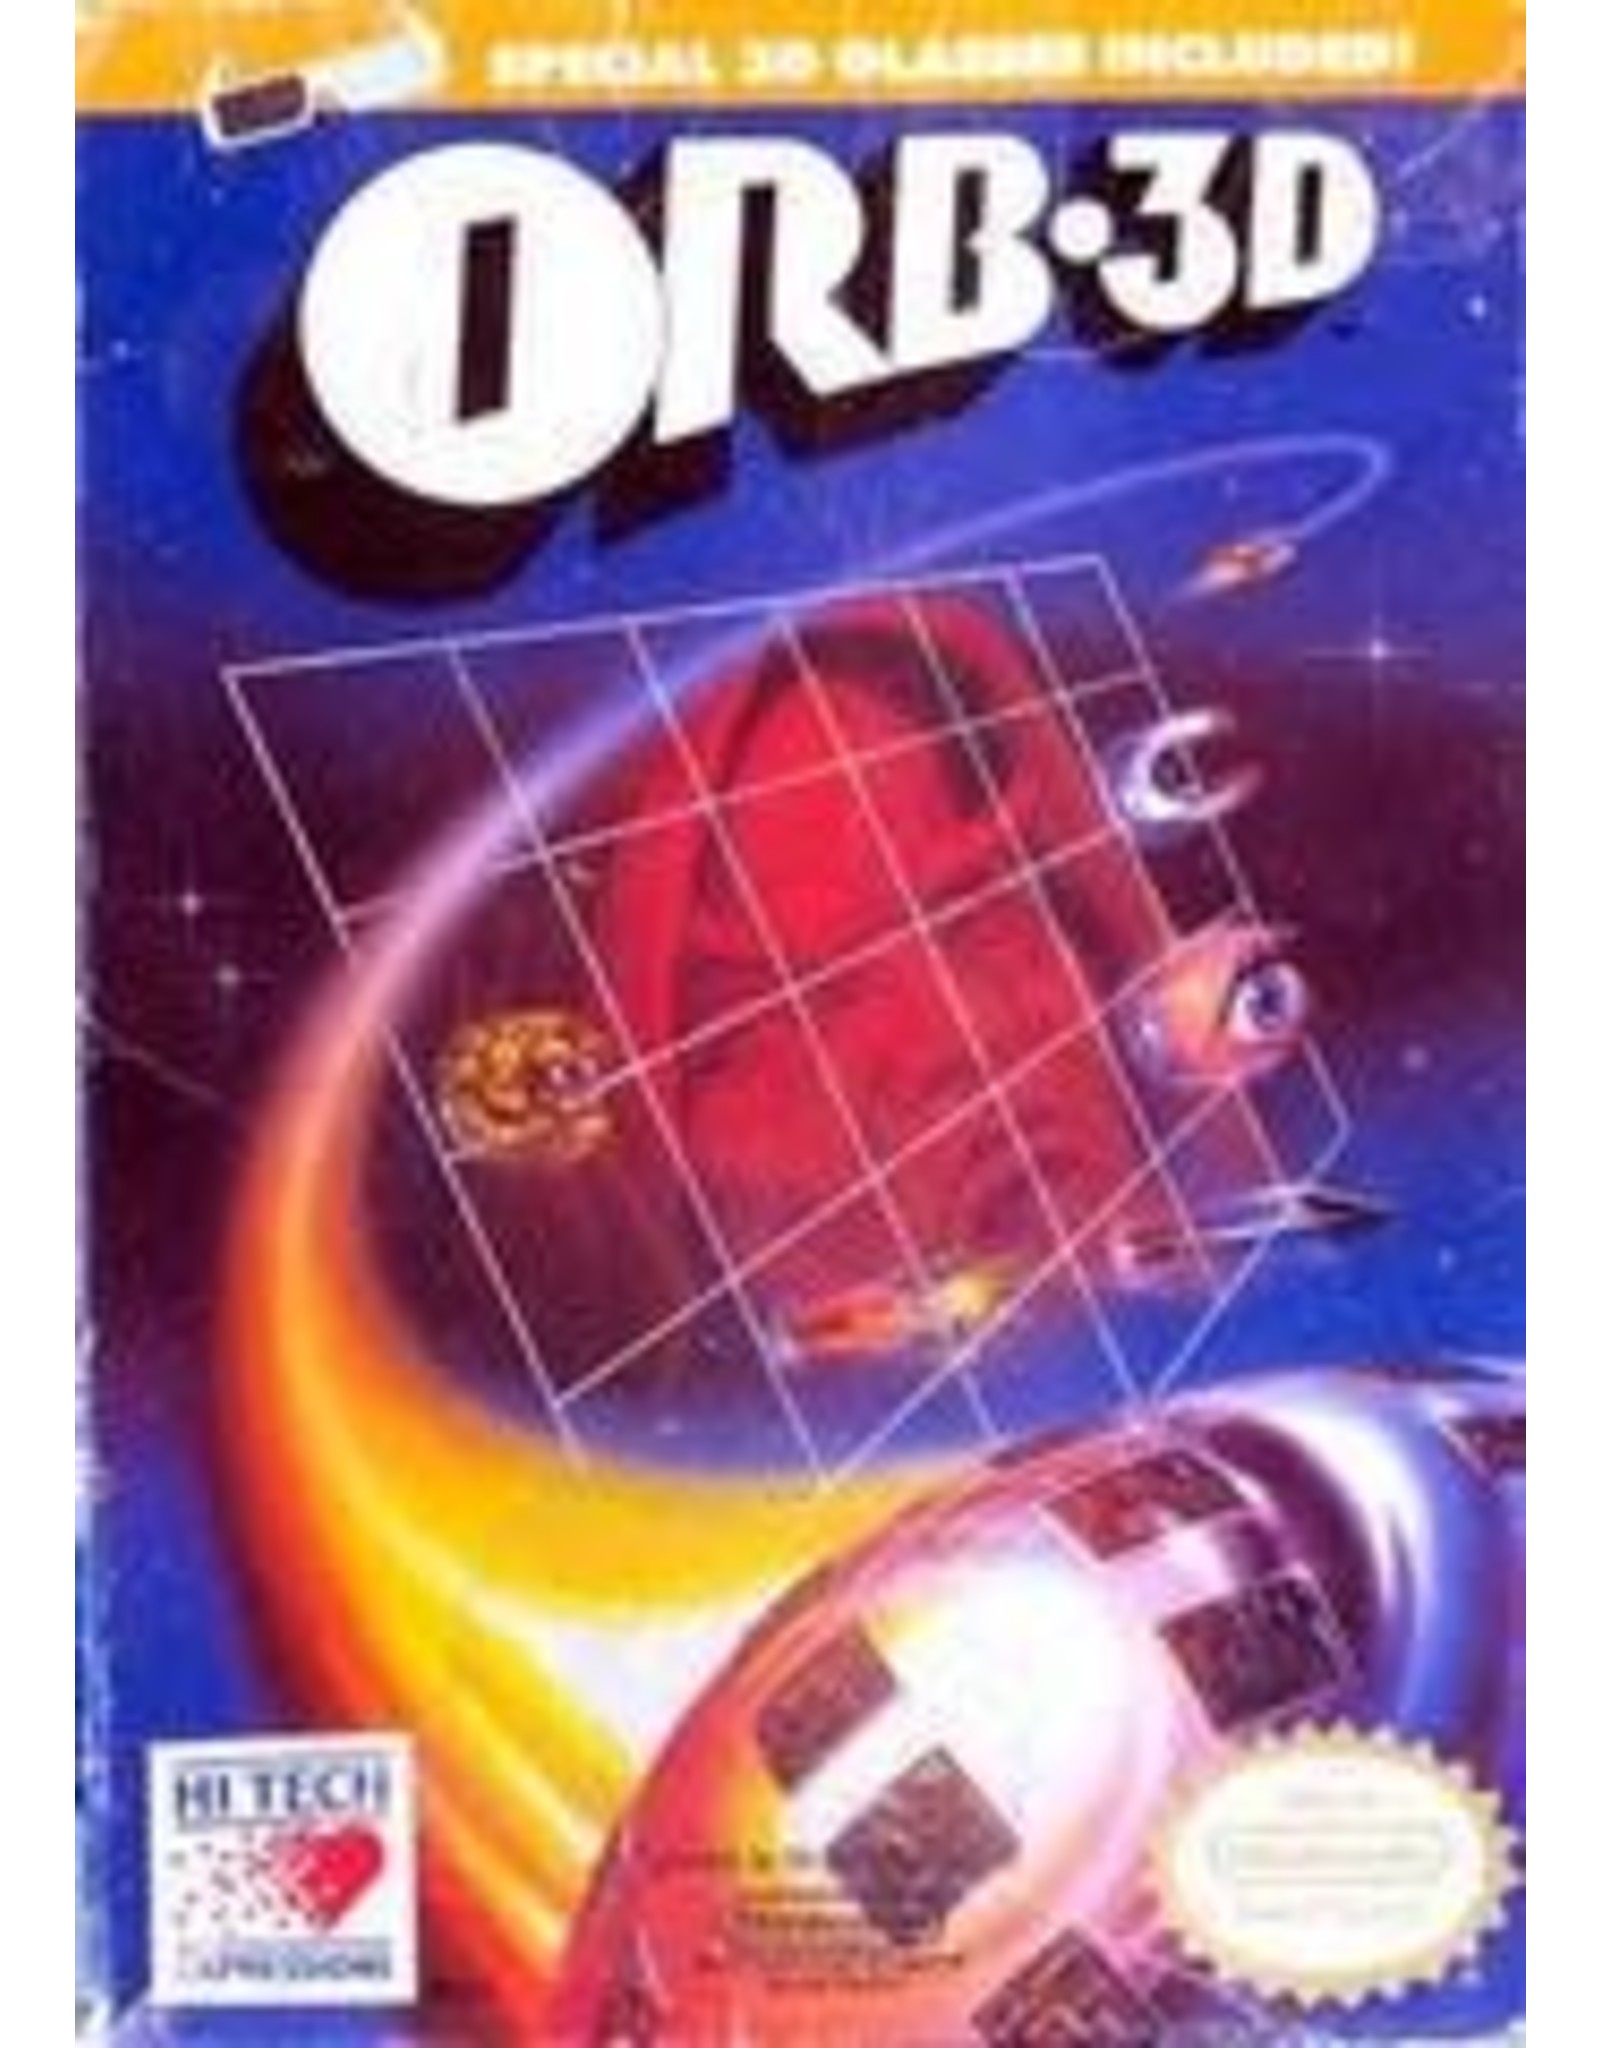 NES ORB 3D (CiB, Damaged Box, Includes 3D Glasses!)